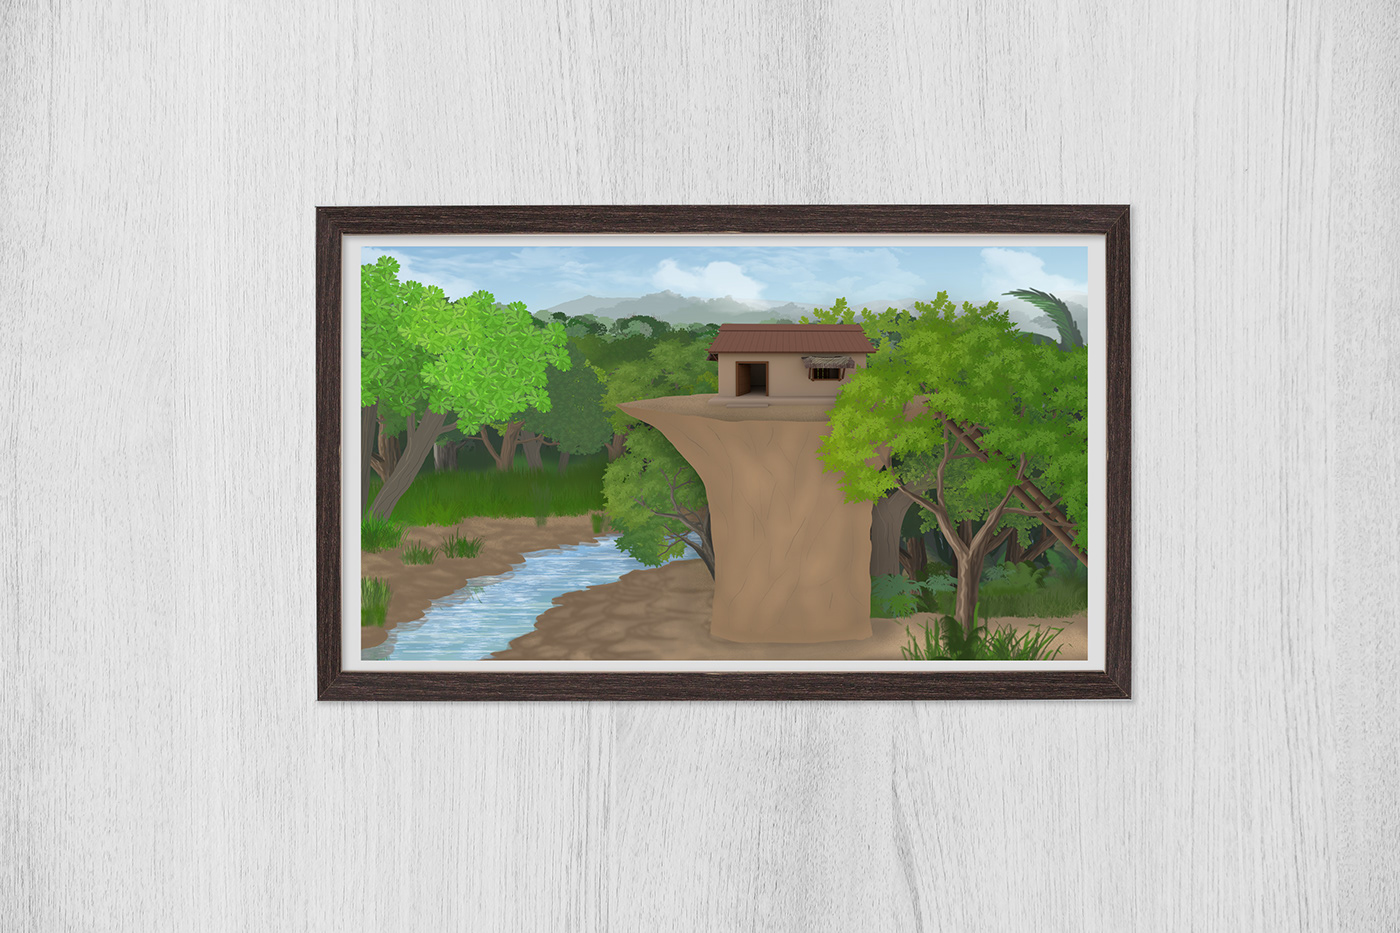 2D Animation animation background Beautiful see-nary cartoon background graphics design HOUSE DESIGN hut Illustrator photoshop river